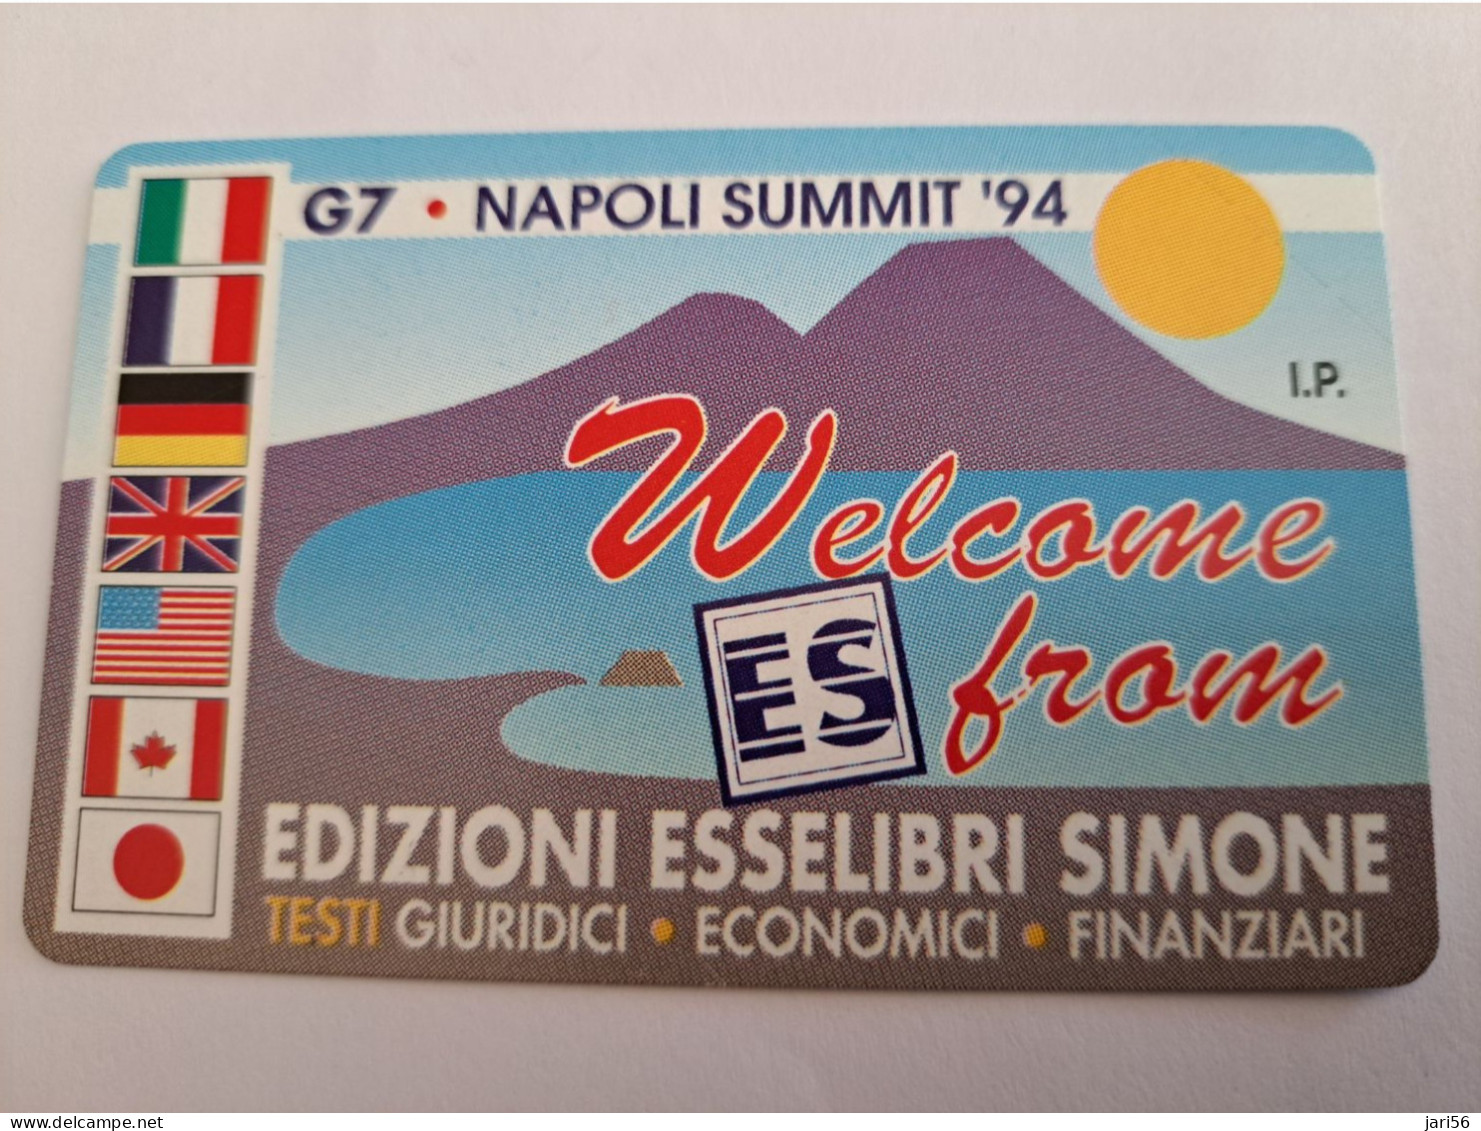 ITALIA LIRE 2000 /G7 NAPOLI SUMMIT '94 / WELCOME FROM ES/ FLAGS/  CARD / MINT    PREPAID   ** 16653** - Public Ordinary